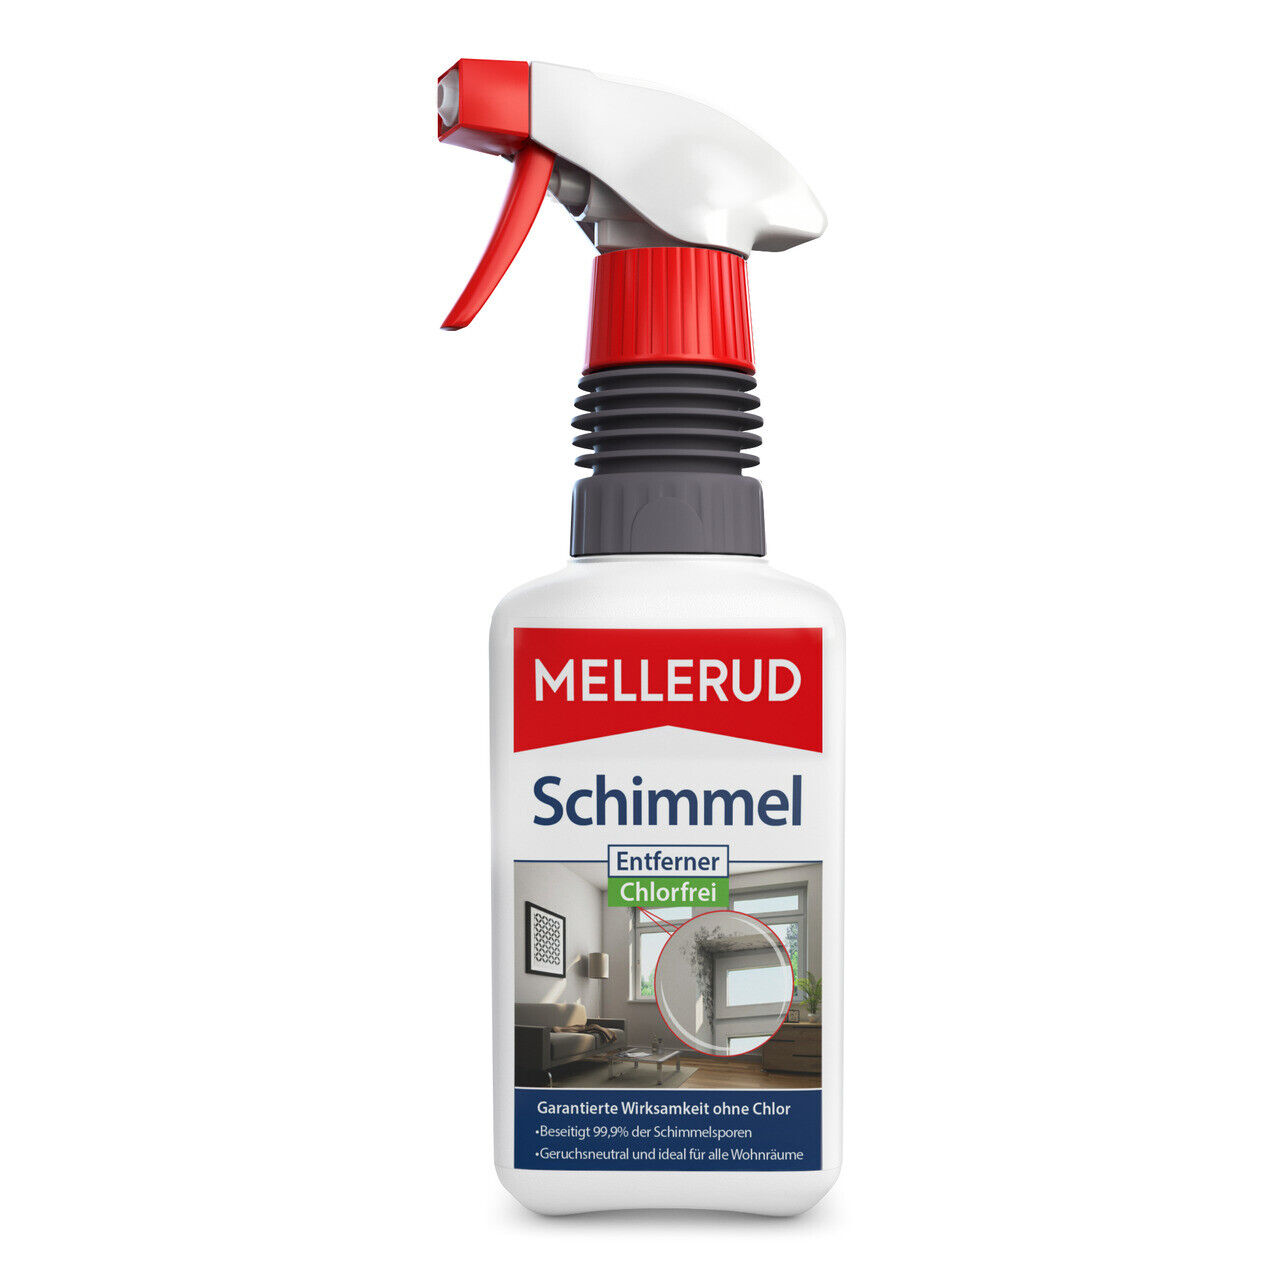 MELLERUD Schimmel Entferner Chlorfrei 0.5 l